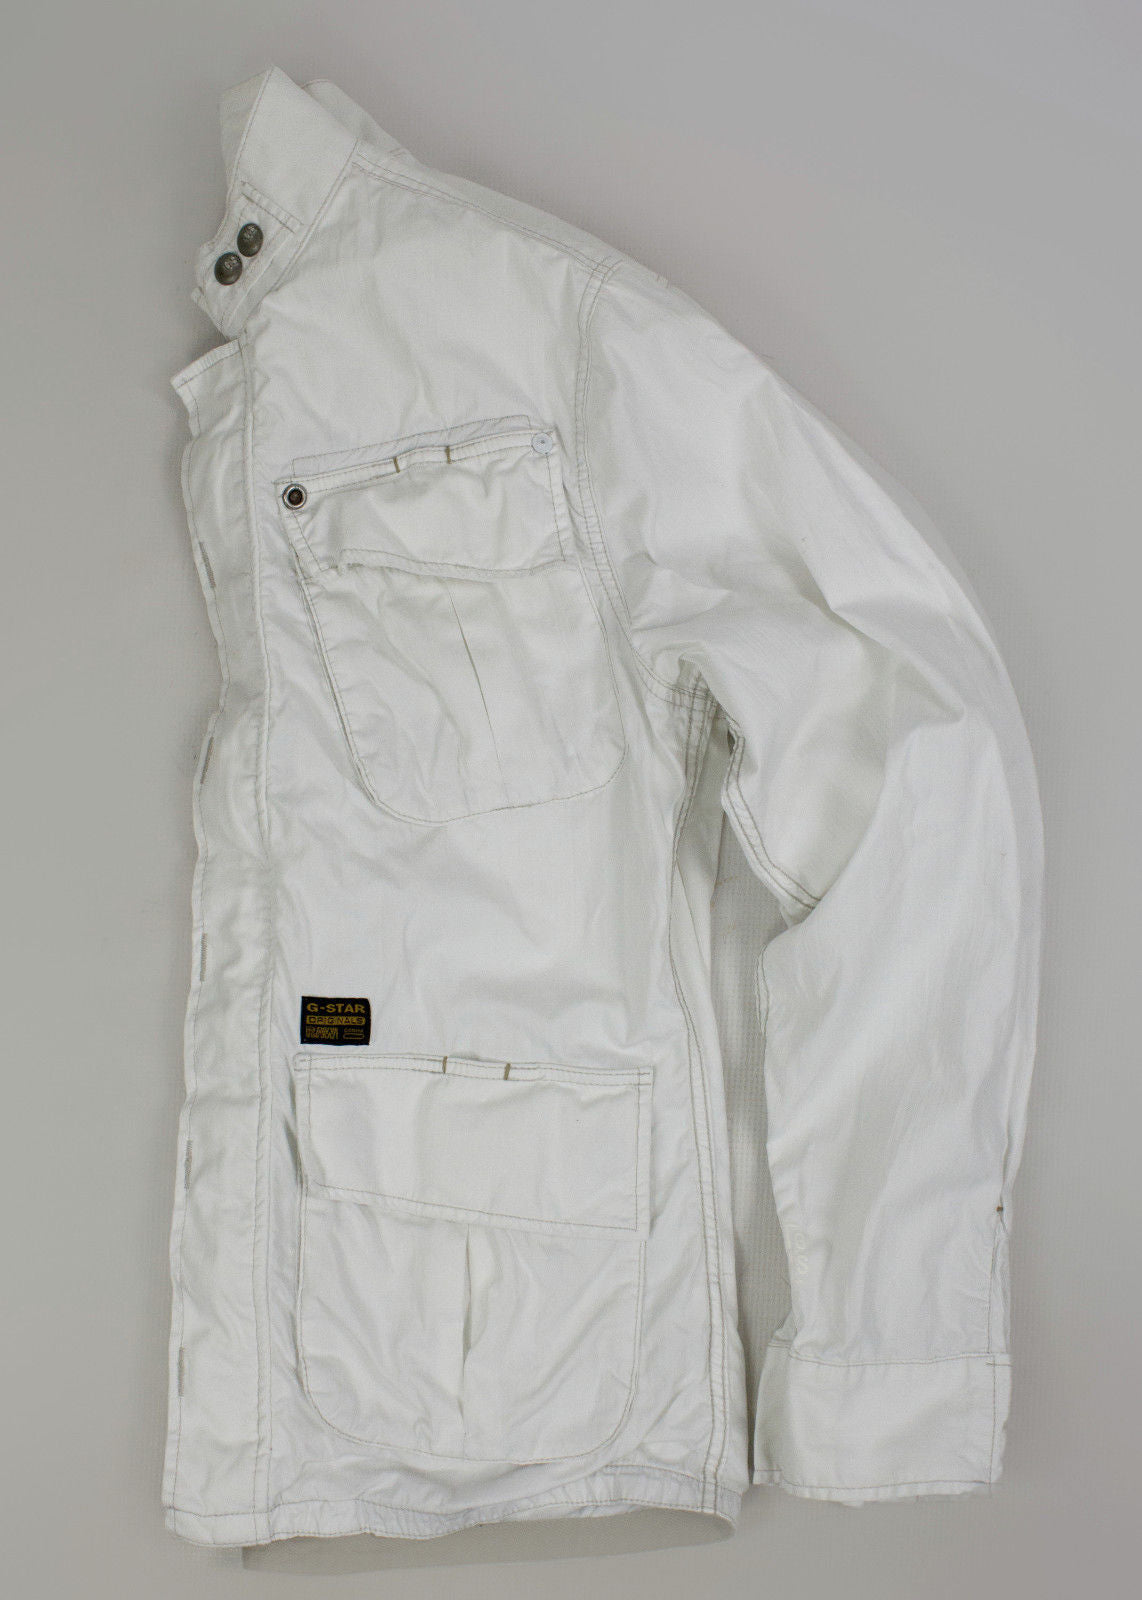 G-STAR RAW Navigator Delta Shirt White Jacket, L - secondfirst